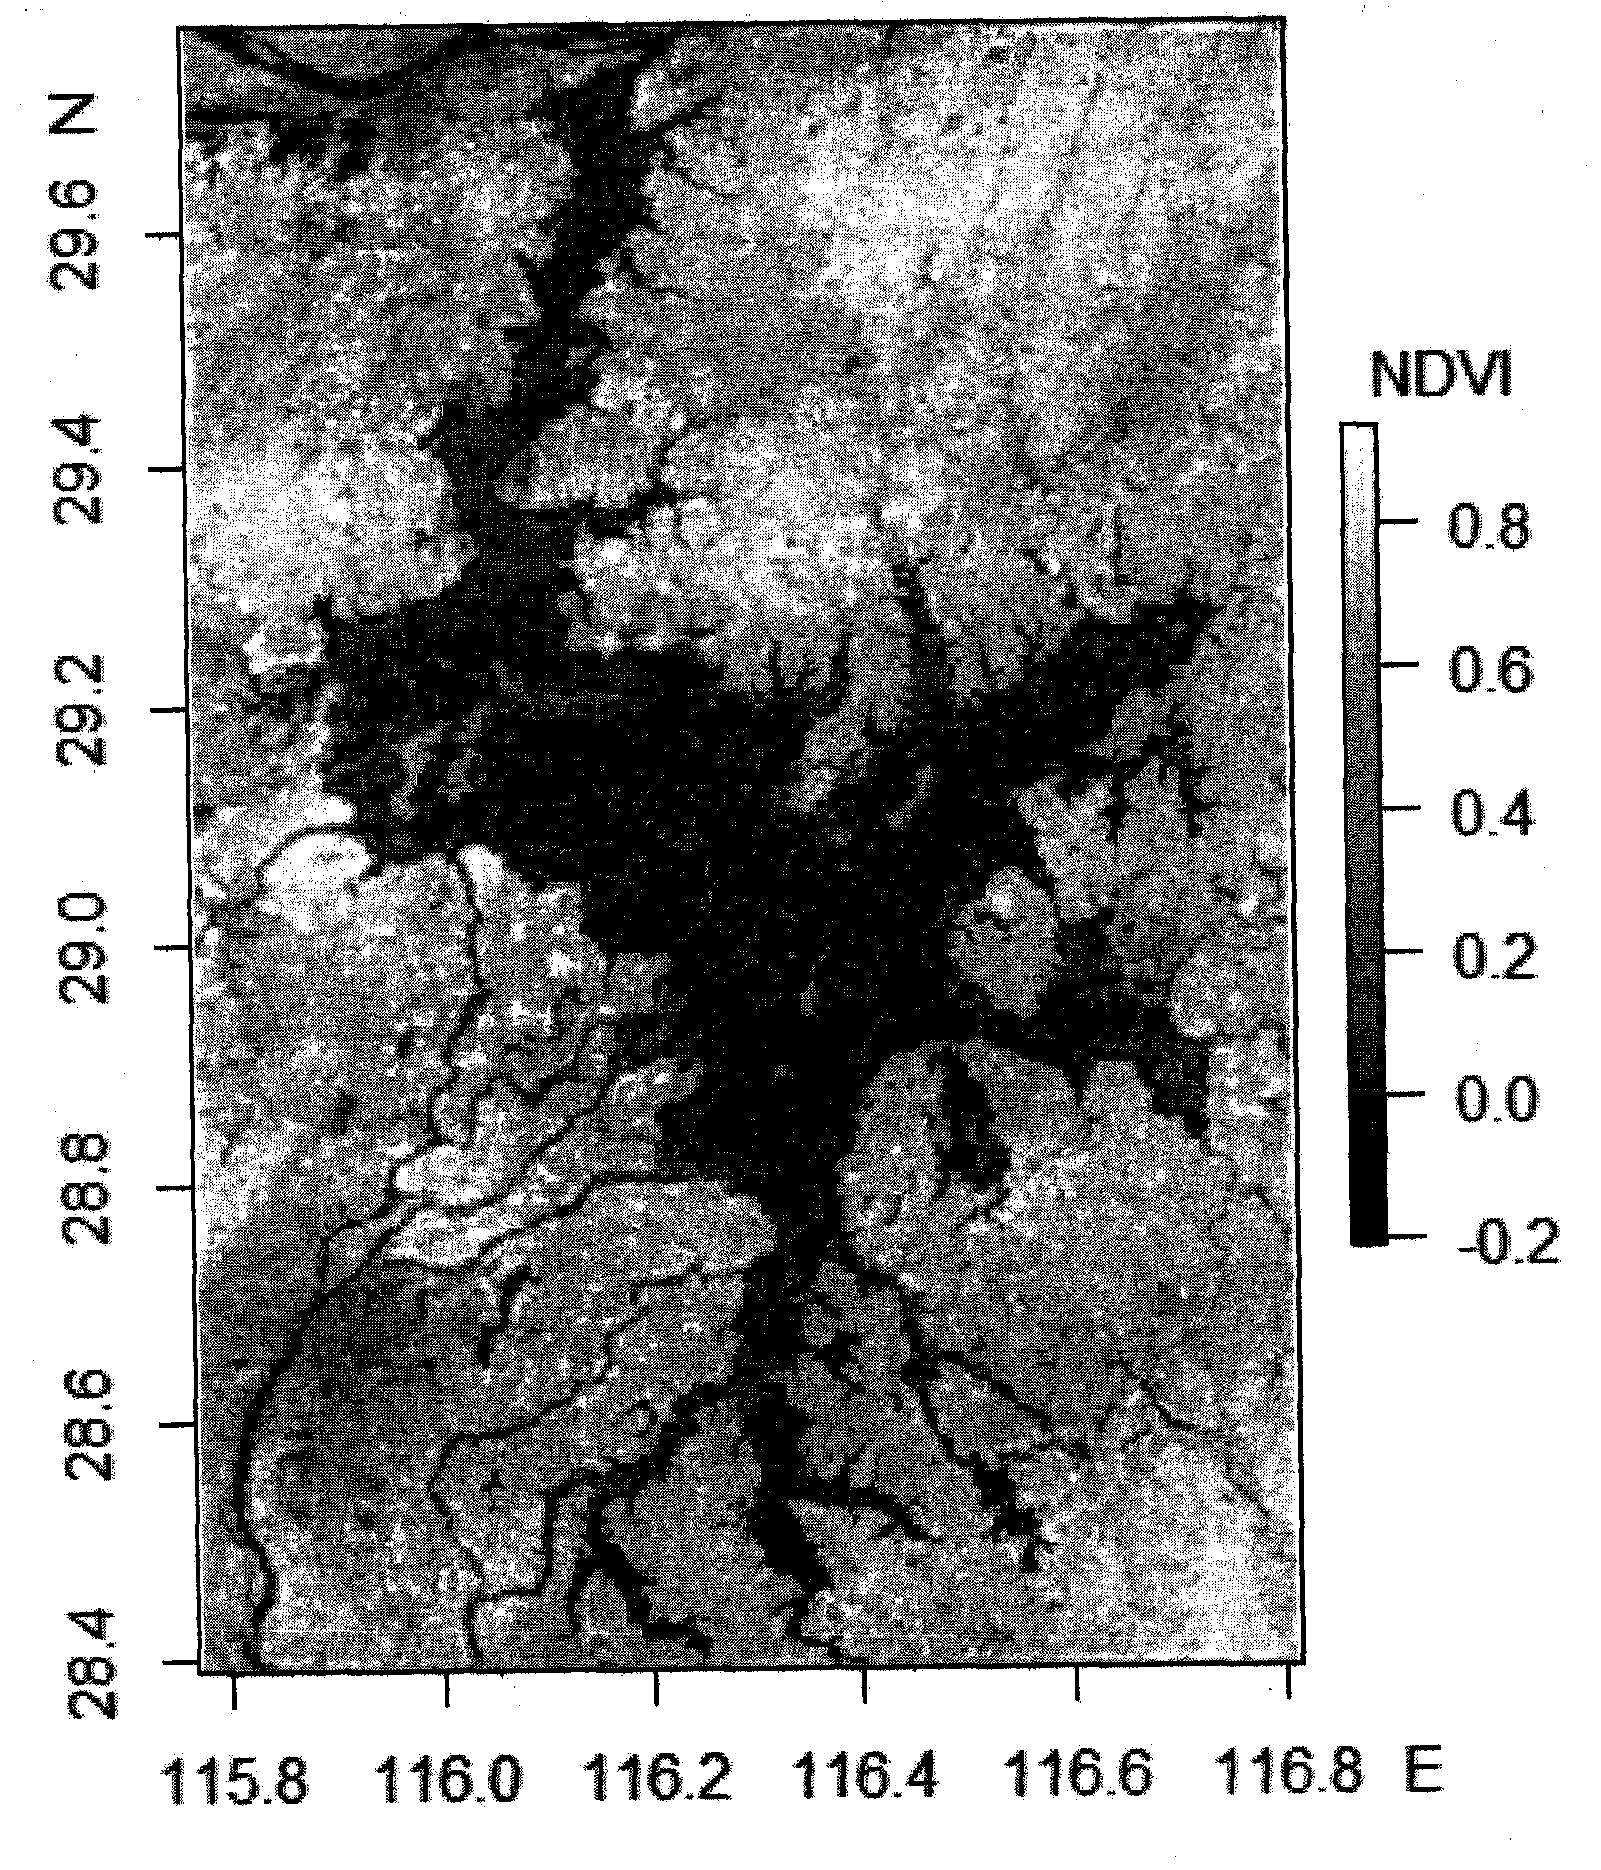 Abnormal submerging area detection method based on remote sensing vegetation index time sequence